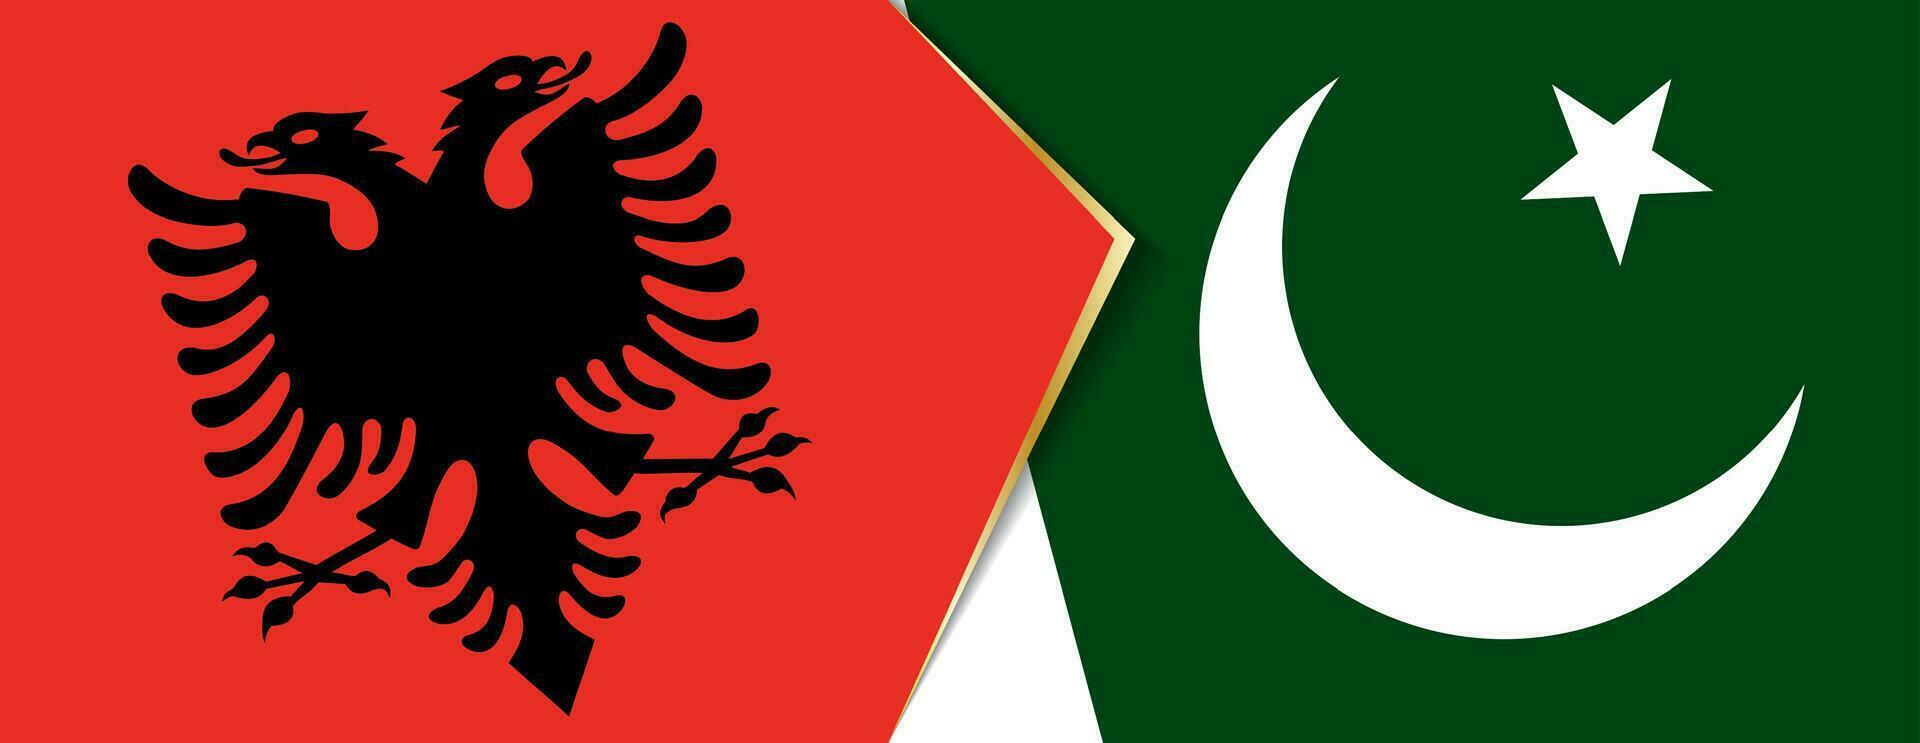 Albanien und Pakistan Flaggen, zwei Vektor Flaggen.